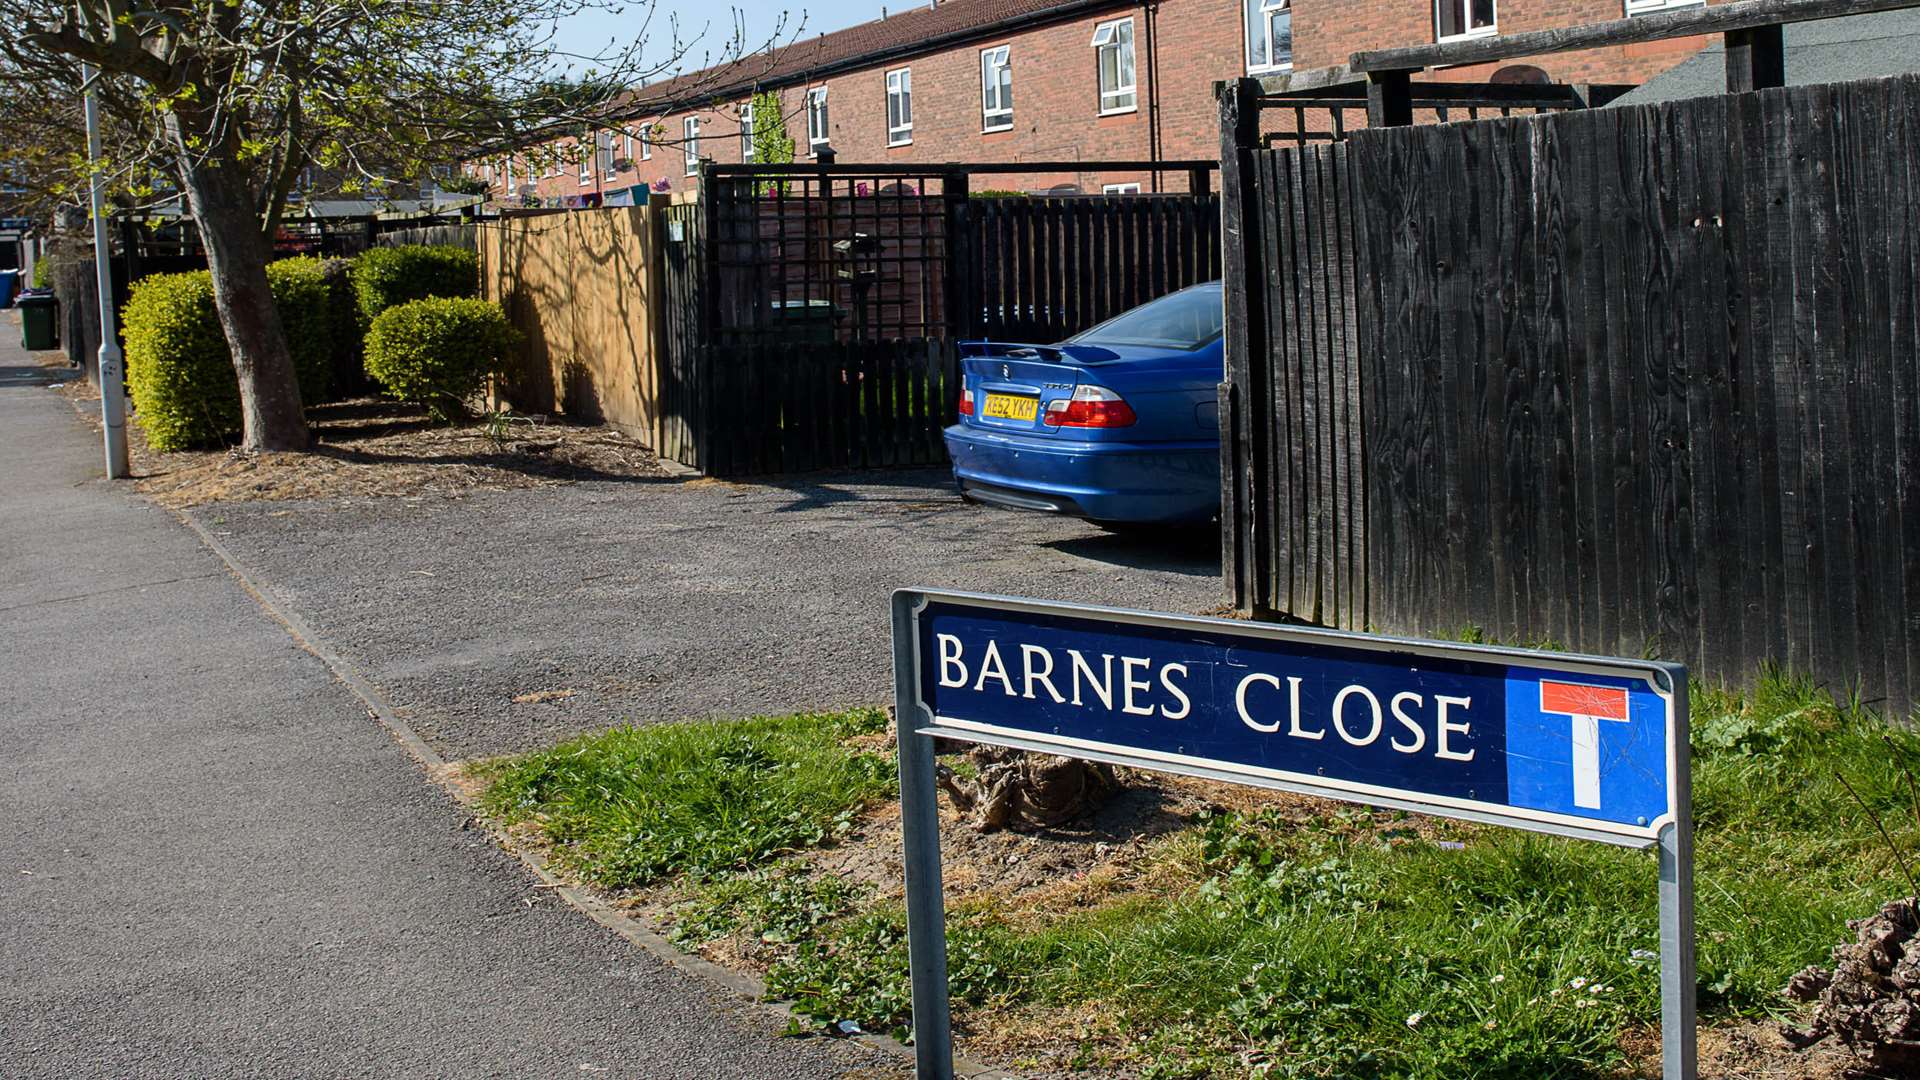 Barnes Close, where the attack took place.